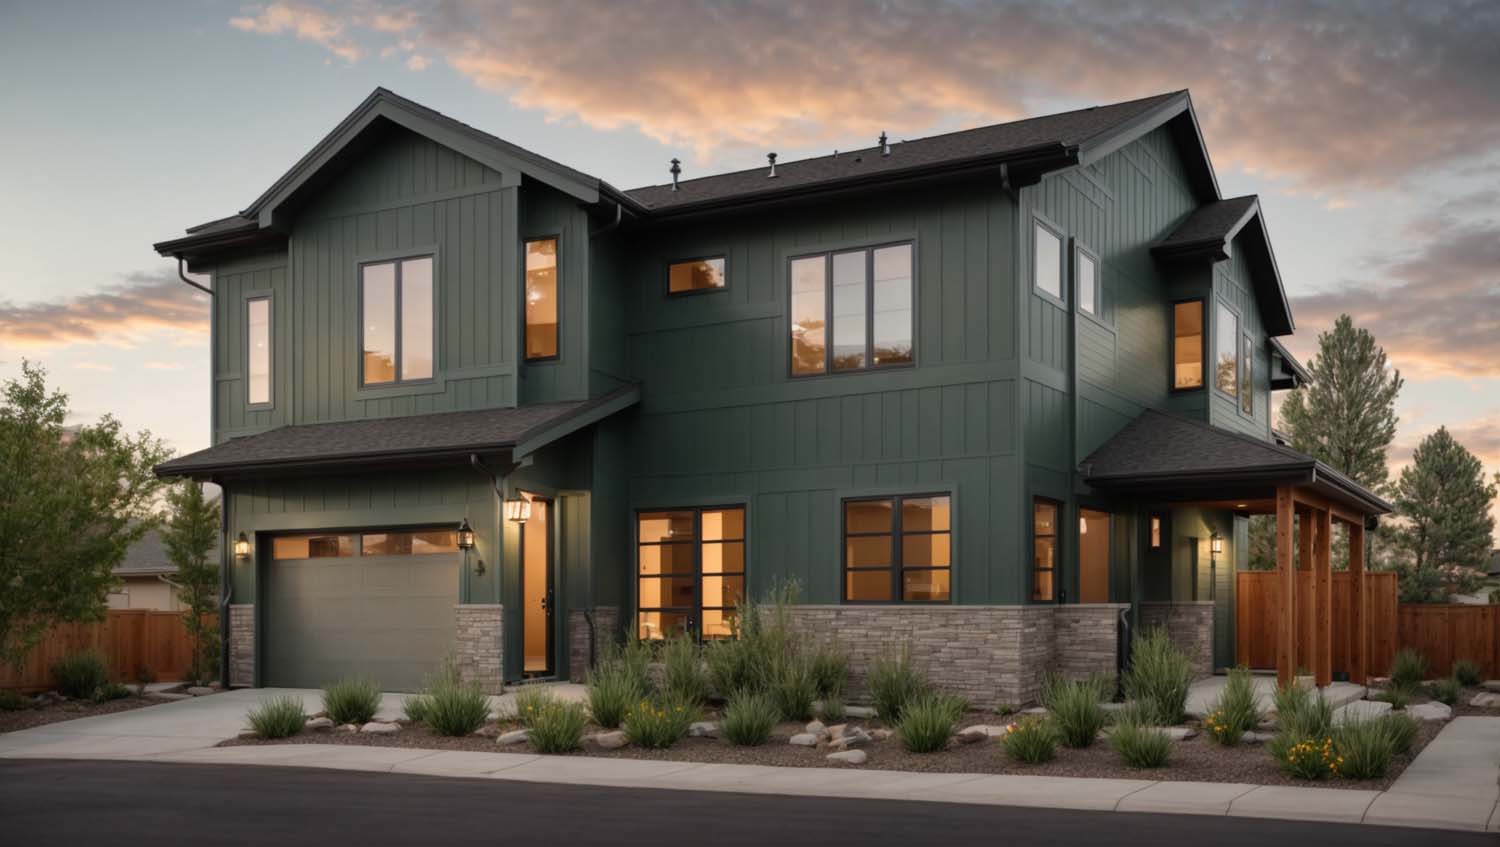 Mansion with Shingle Siding - Siding Colorado in Colorado Springs